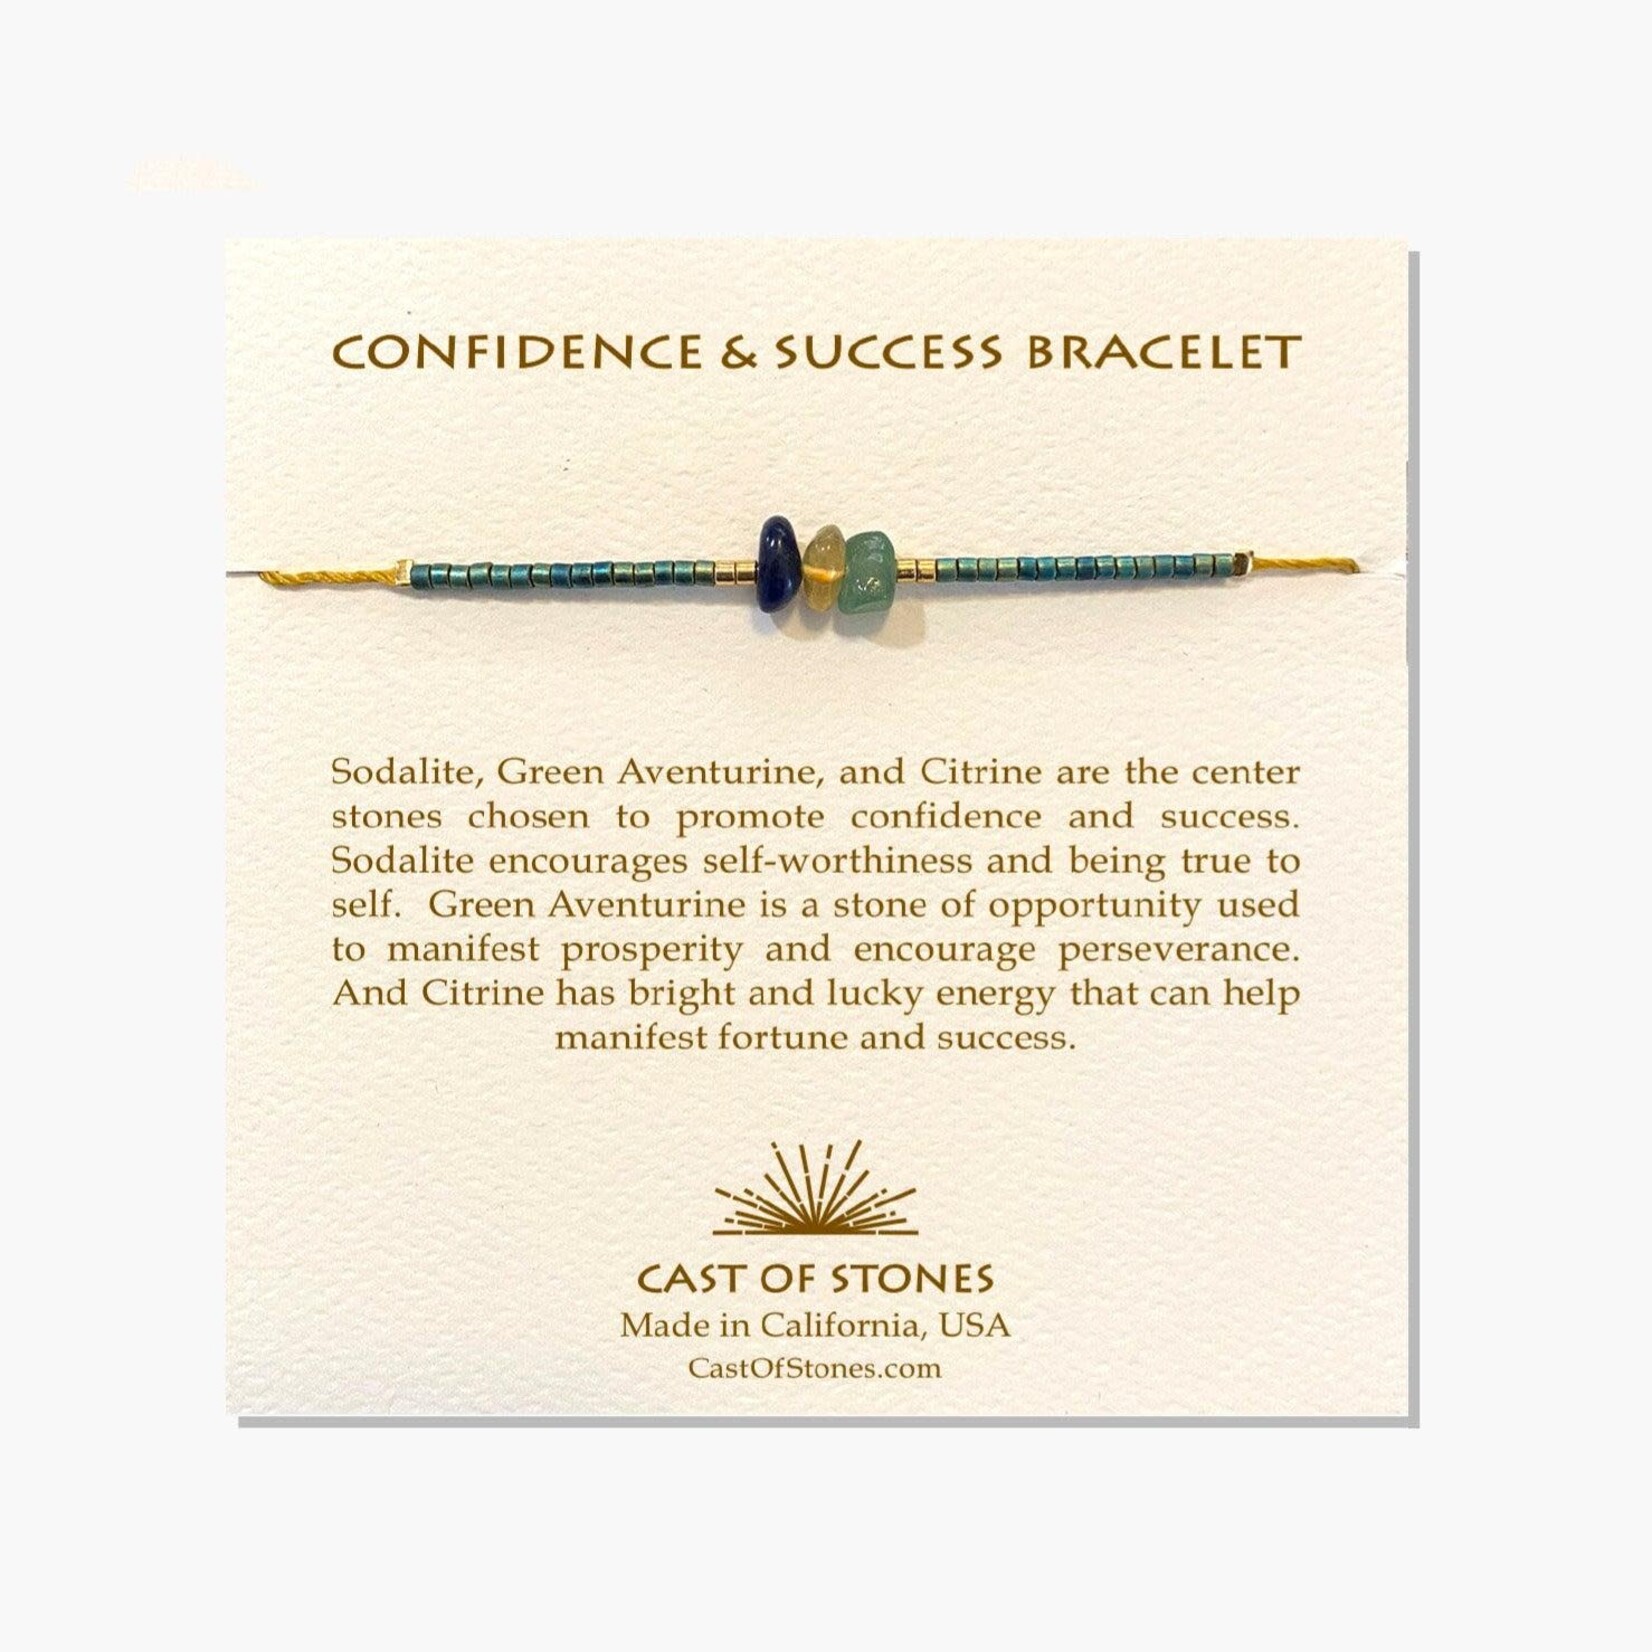 Confidence & Success Bracelet